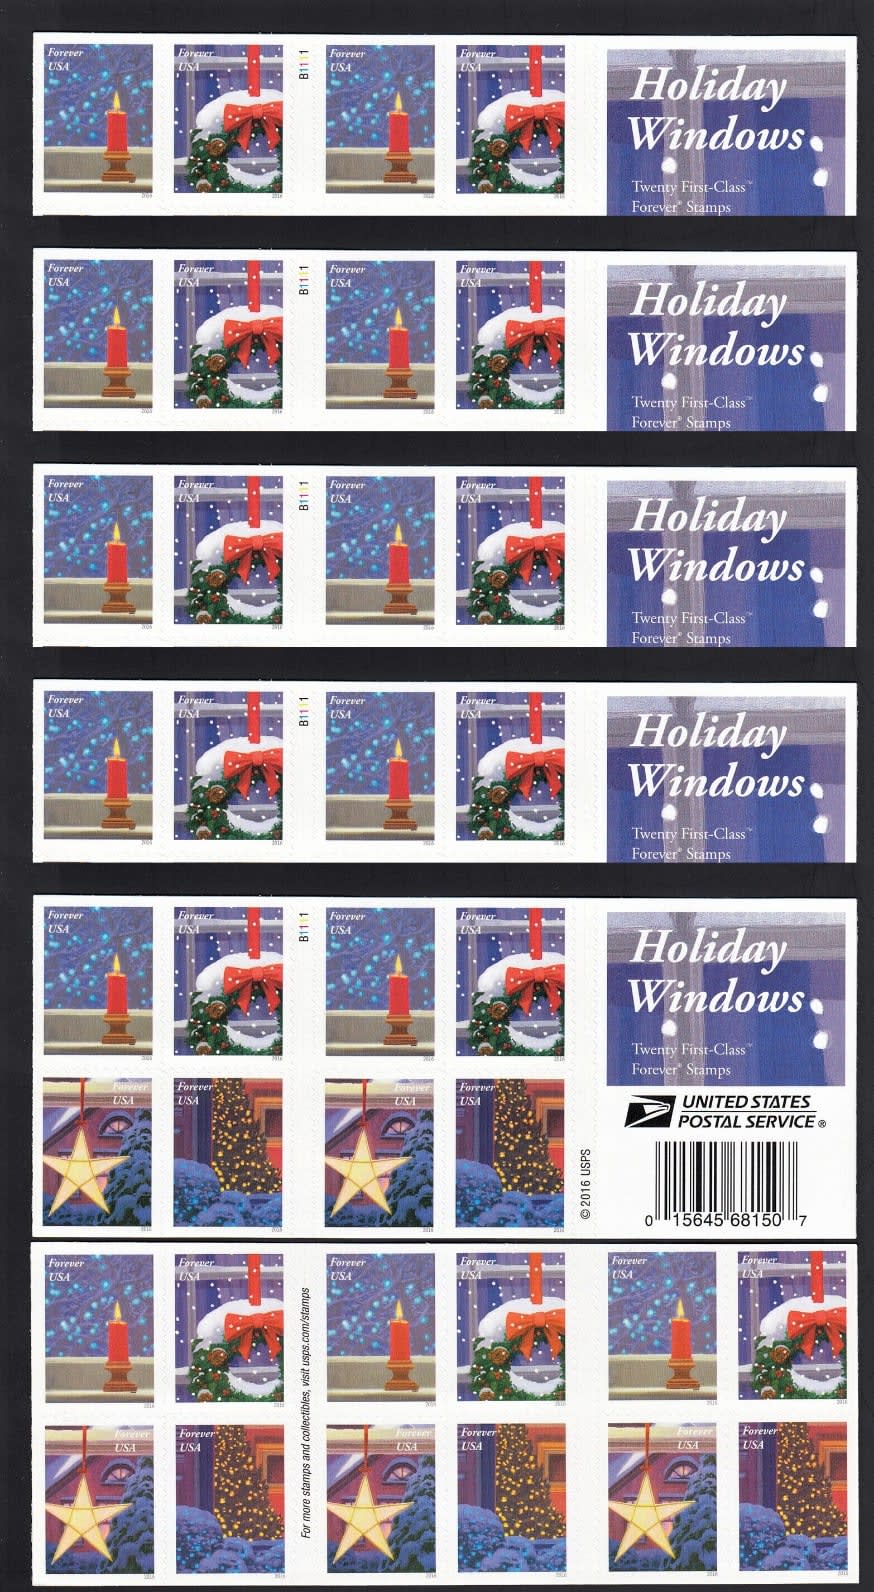  Estampillas Holiday Windows Forever de USPS, libro de